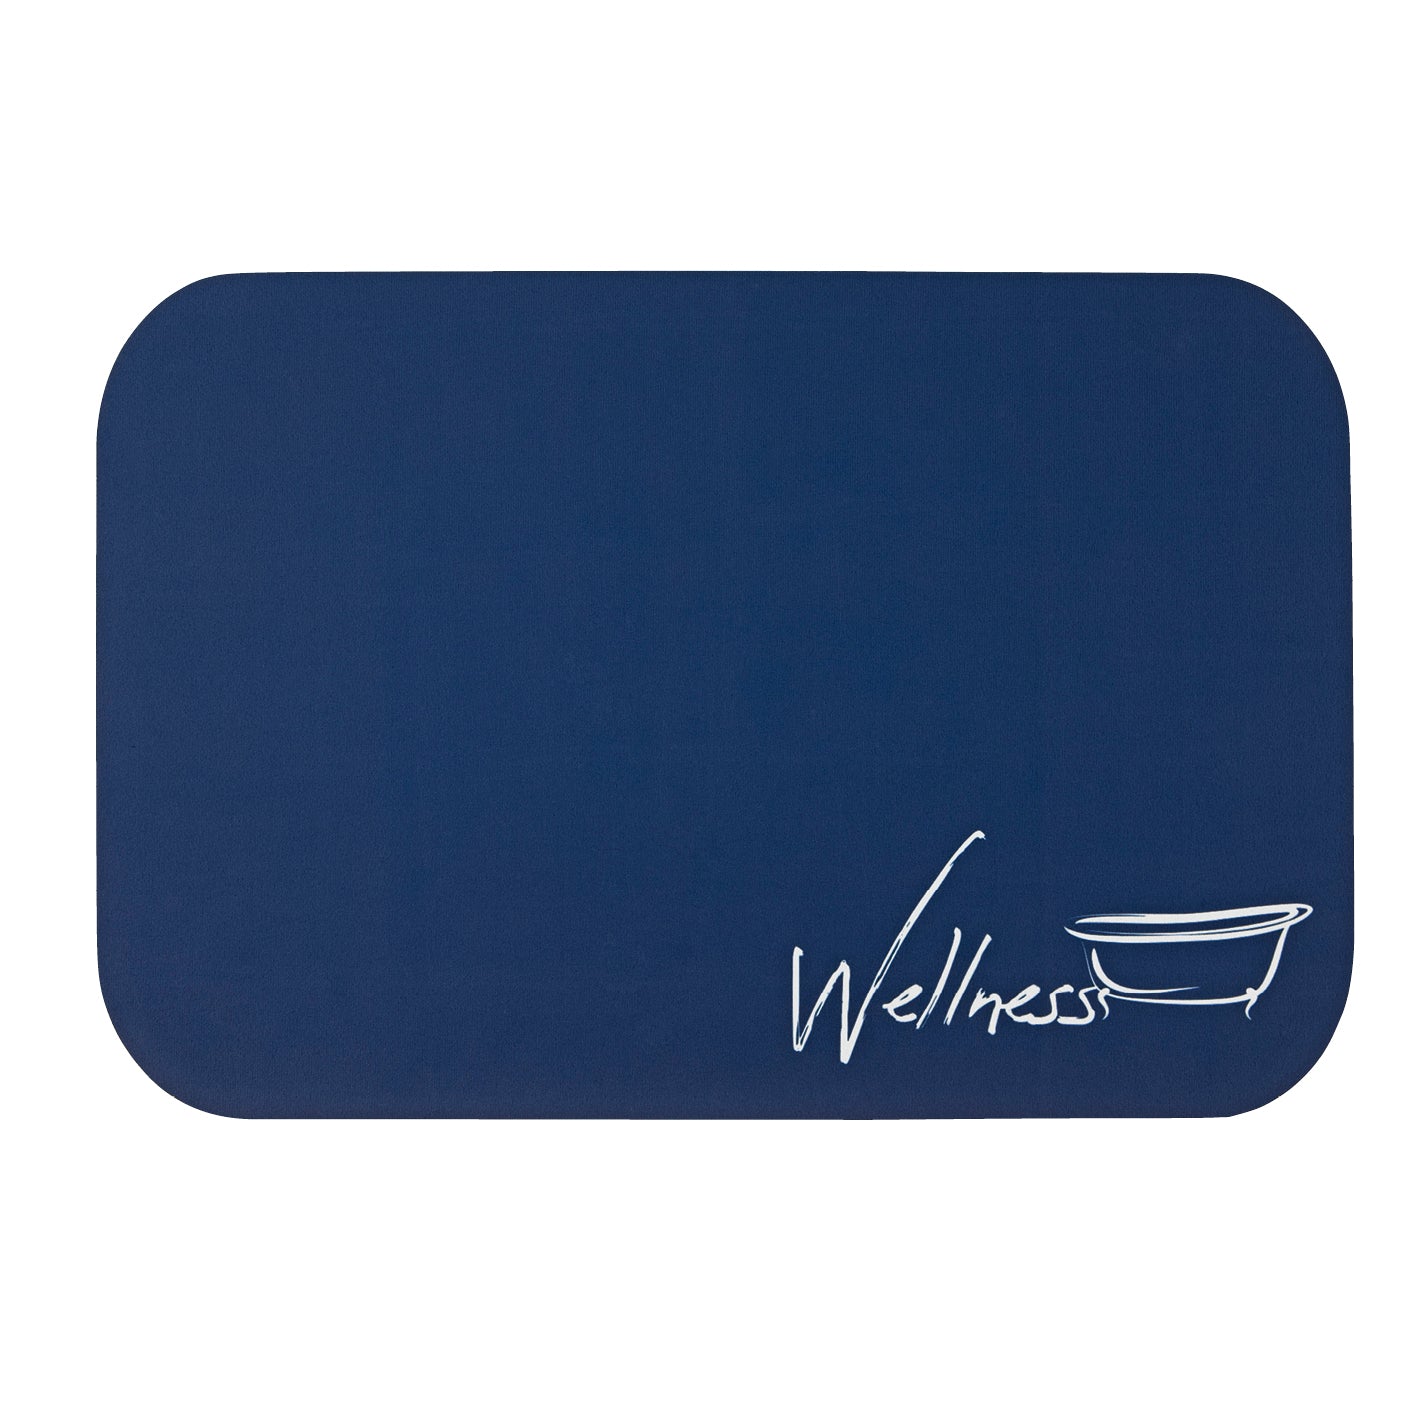 Badematte Wellness - 40x60 cm - blau